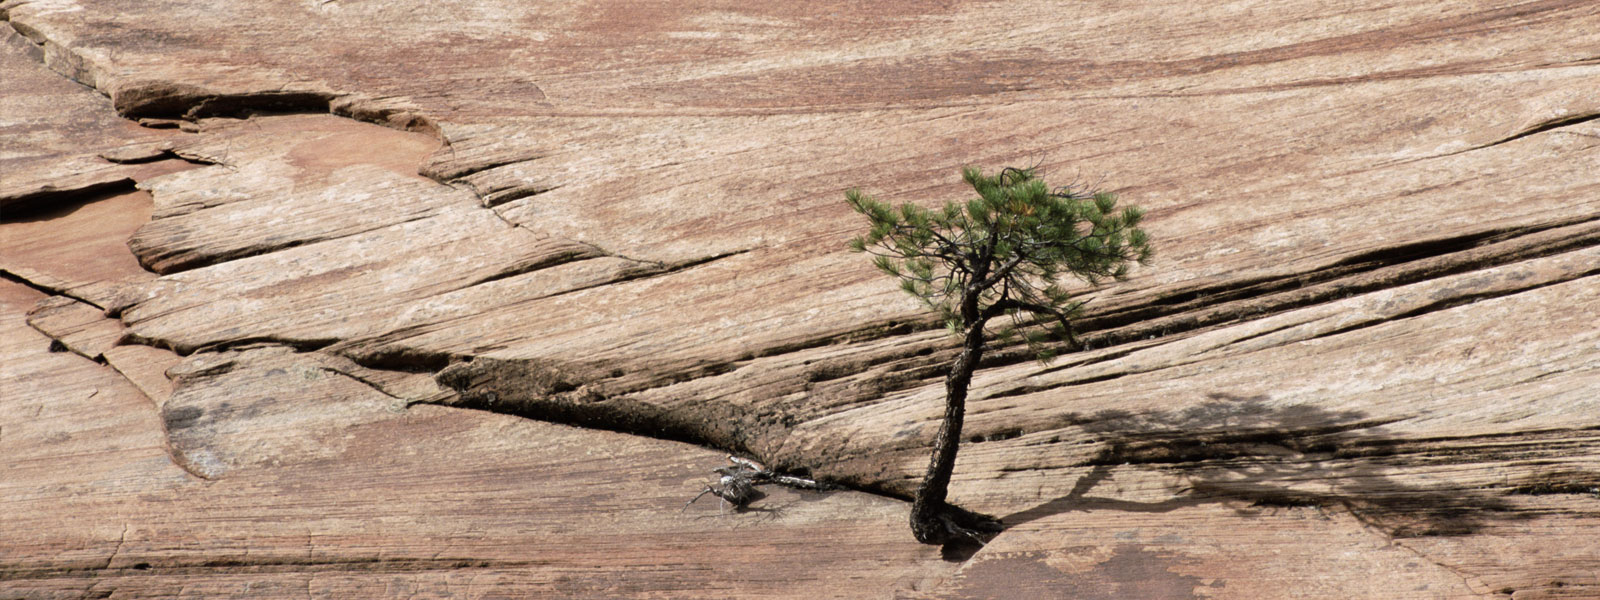 Lone tree growing in rock formation